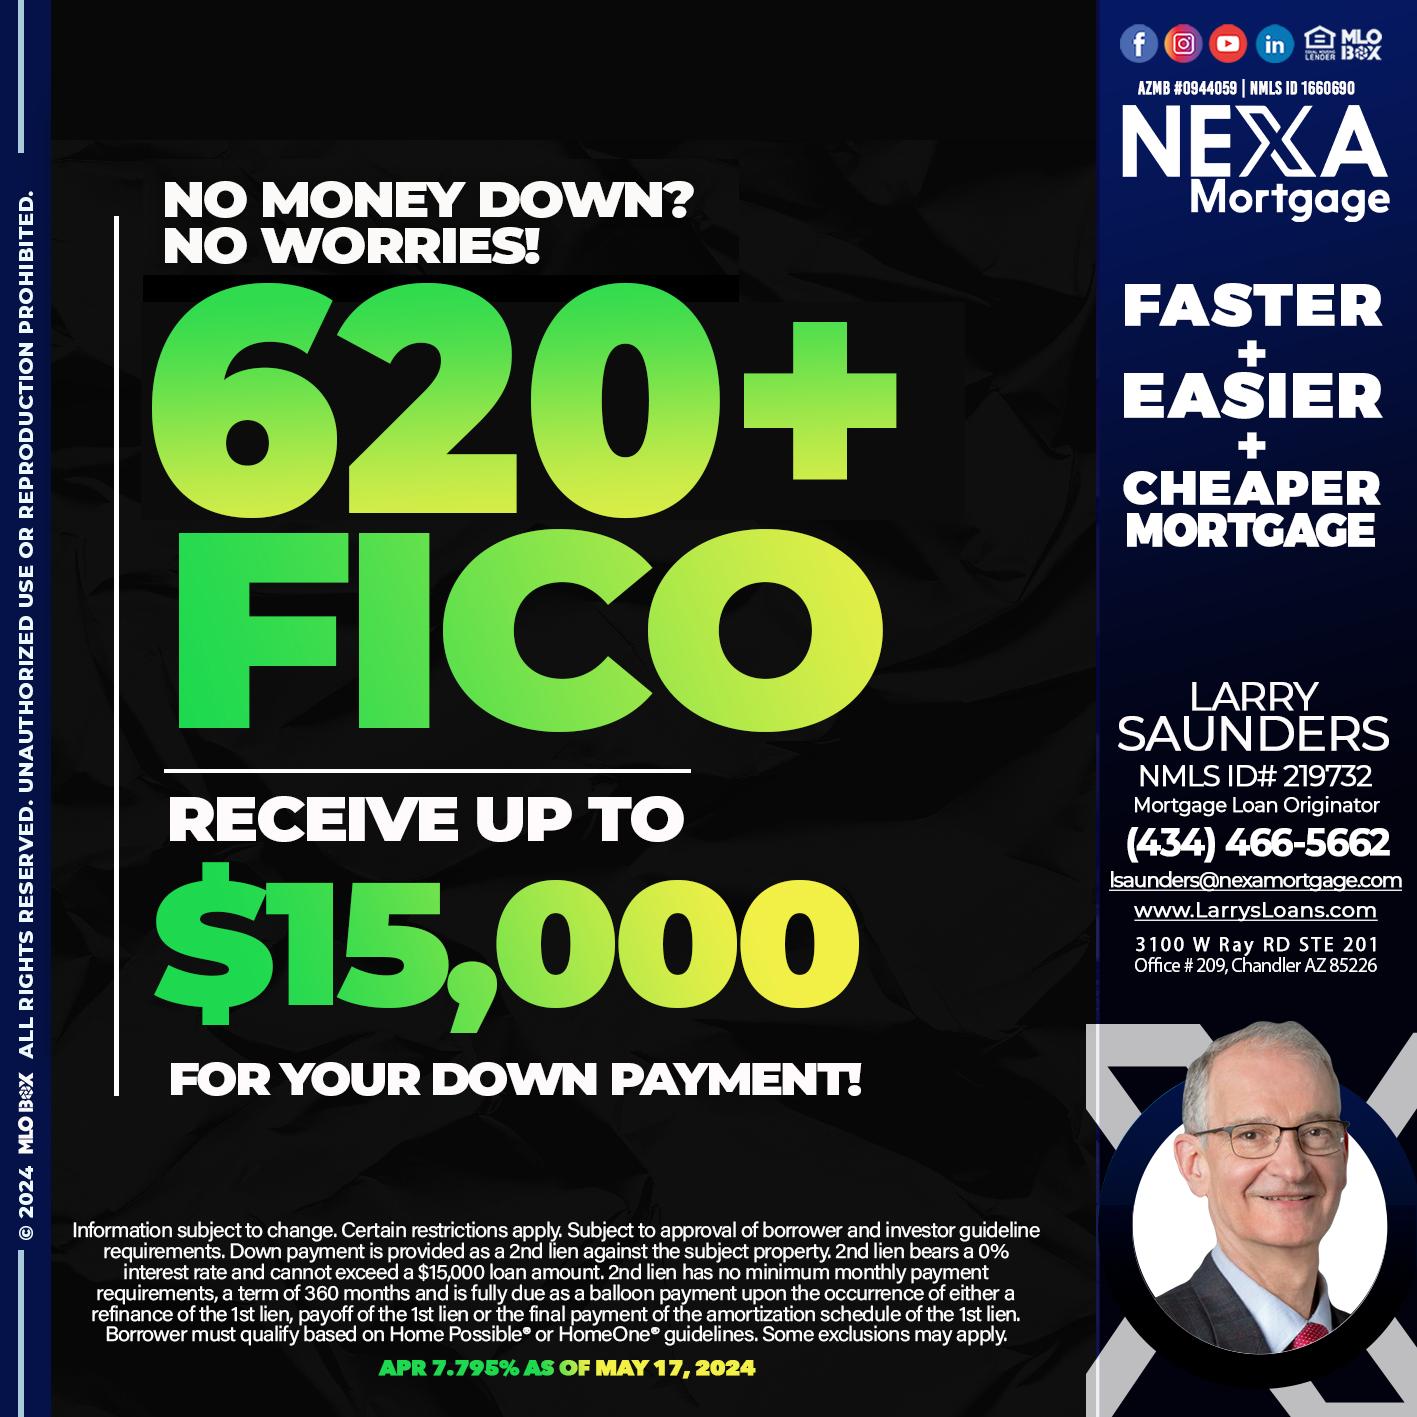 620 FICO - Larry Saunders -Mortgage Loan Originator